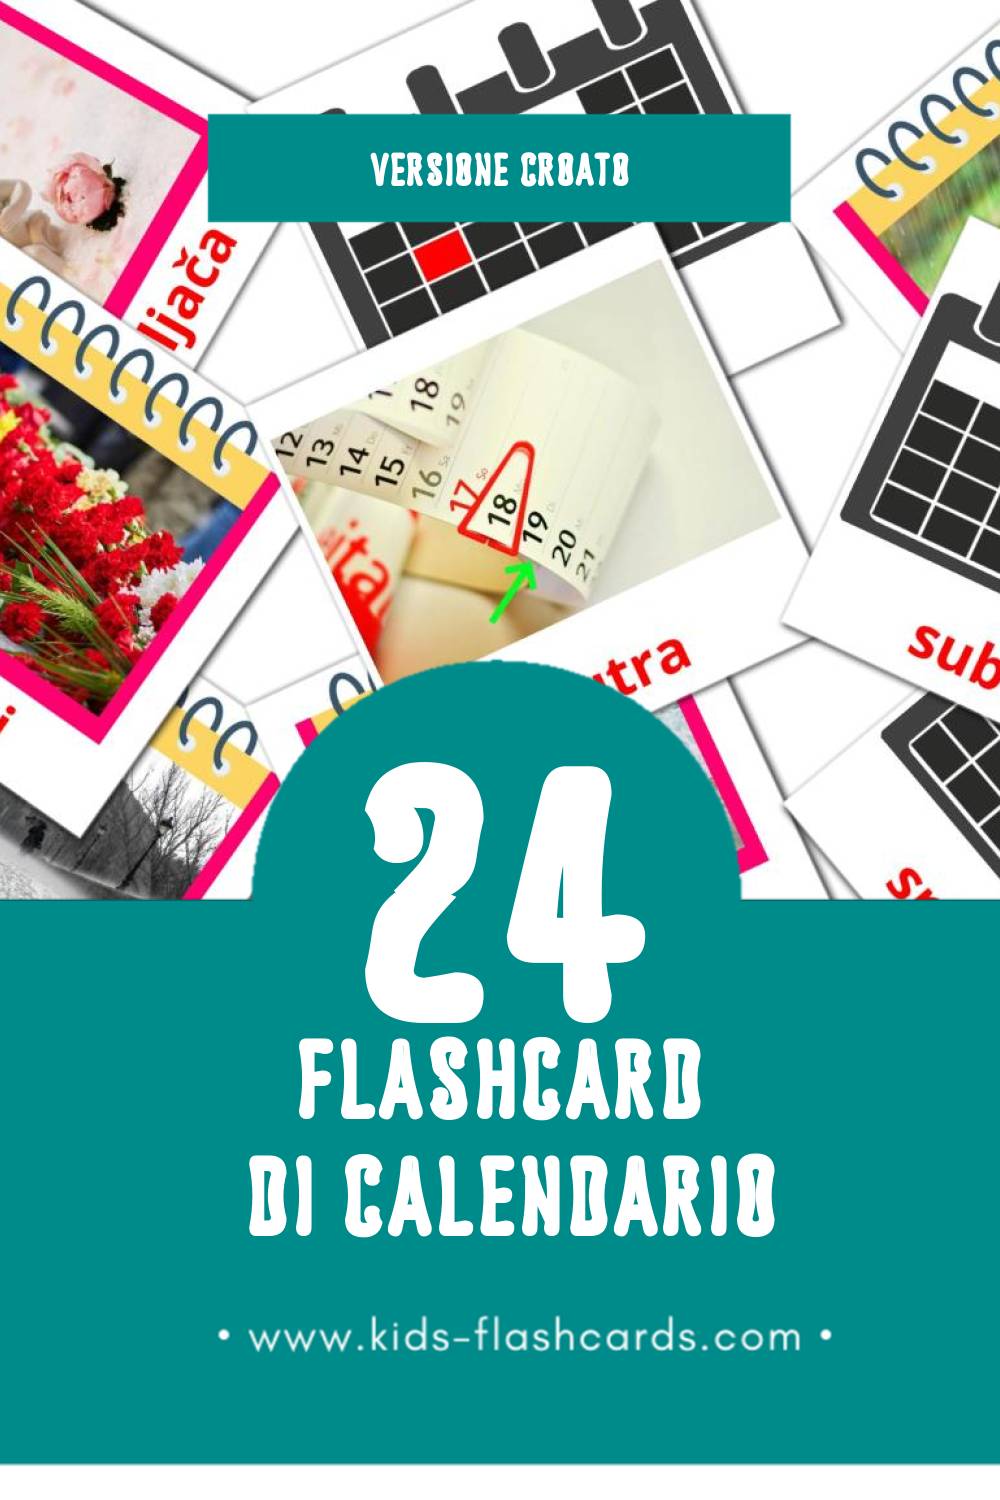 Schede visive sugli kalendar per bambini (24 schede in Croato)